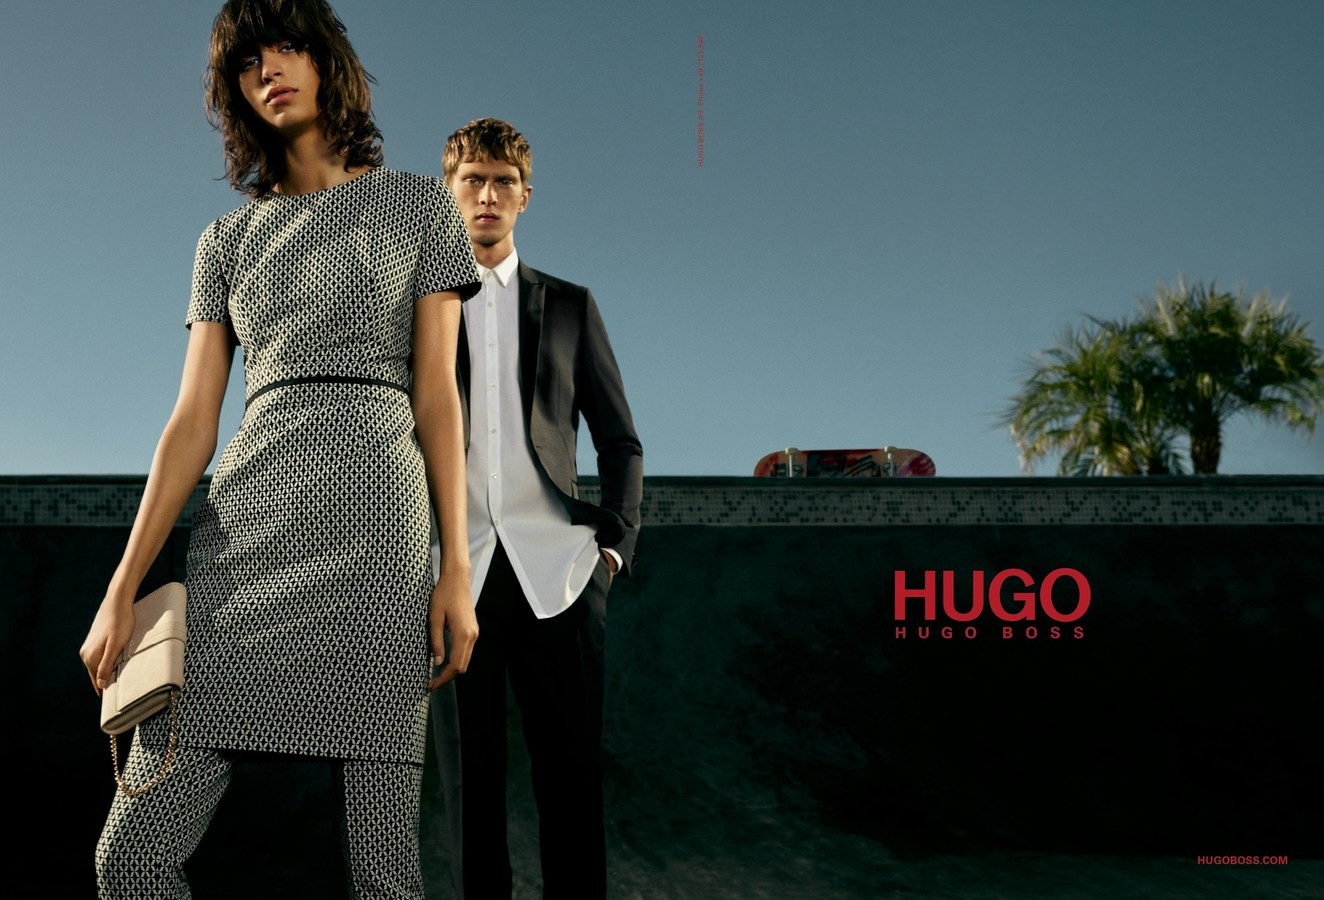 Hugo страна. Хьюго босс. Hugo Boss 6 campaign. Hugo Boss campaign. Hugo – Hugo Boss 1997.